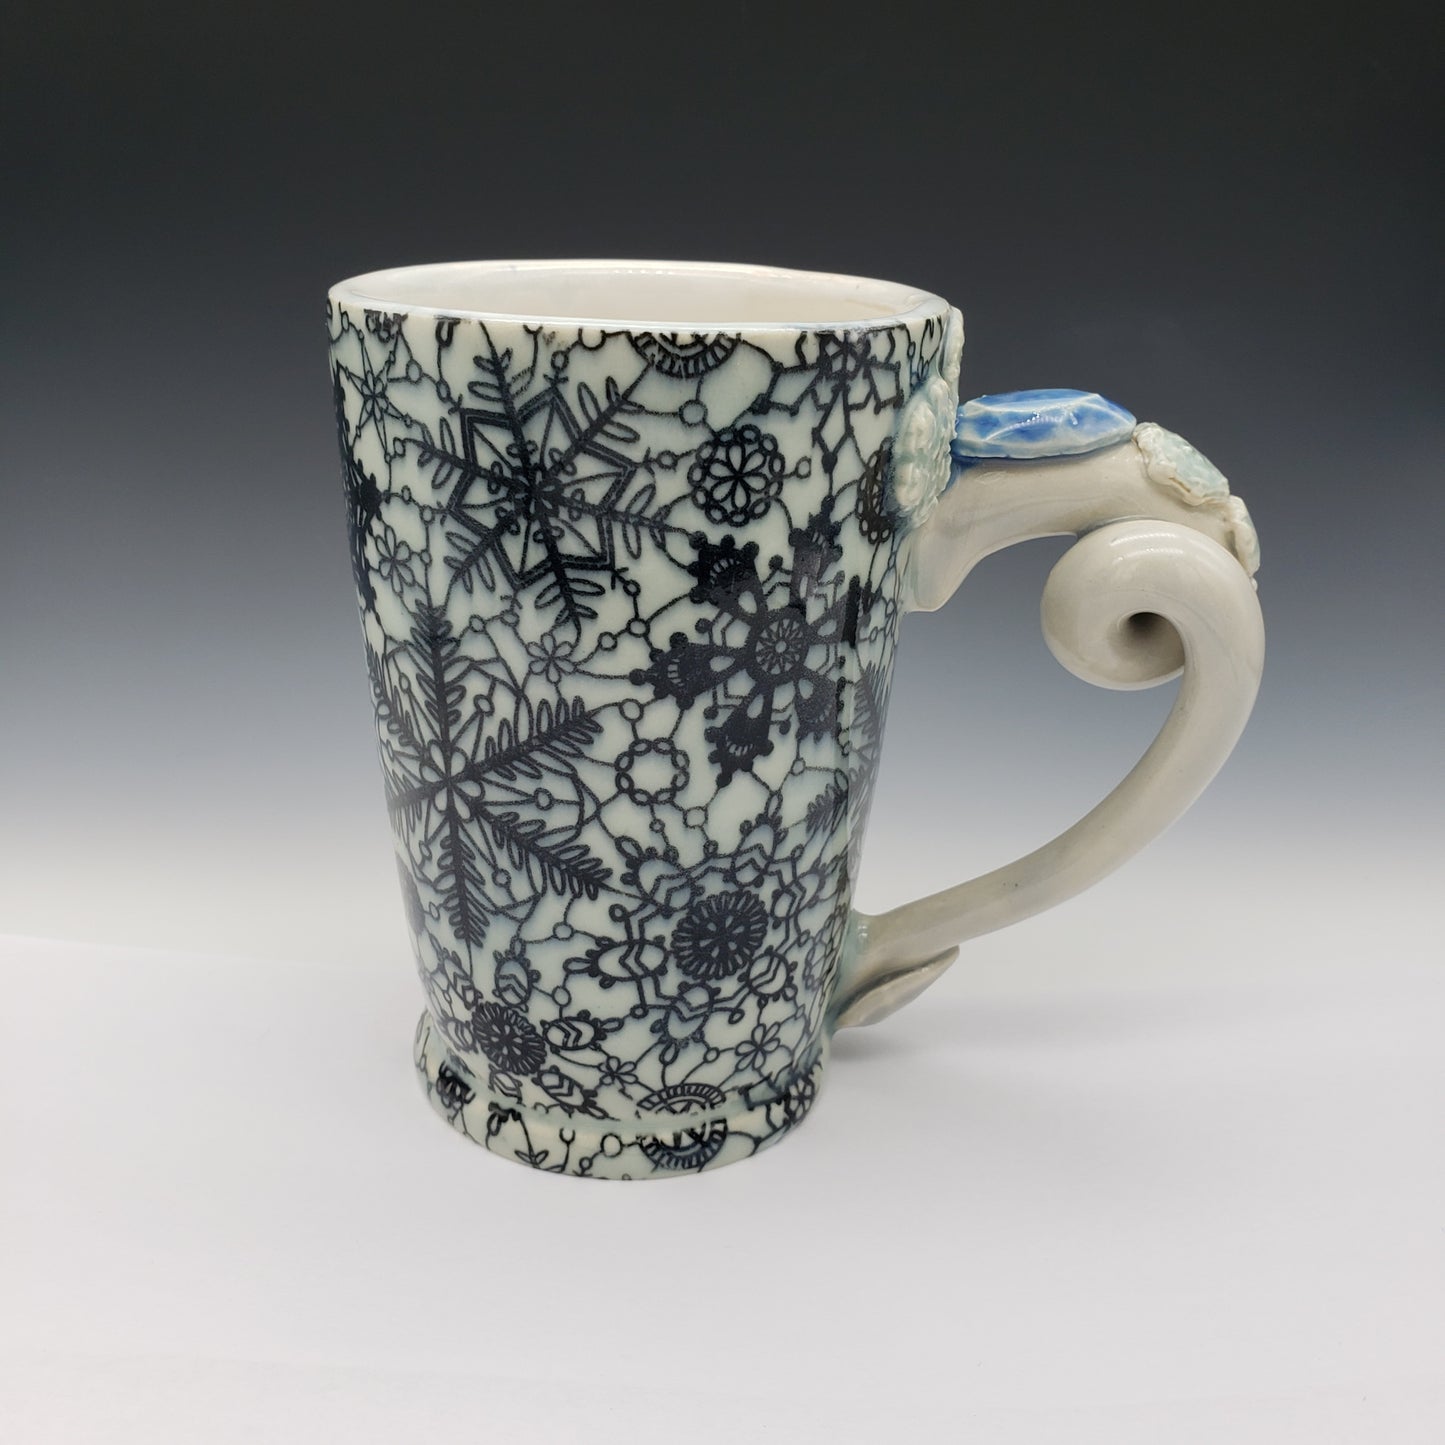 Light blue vintage lace snowflake mug with detailed twist handle